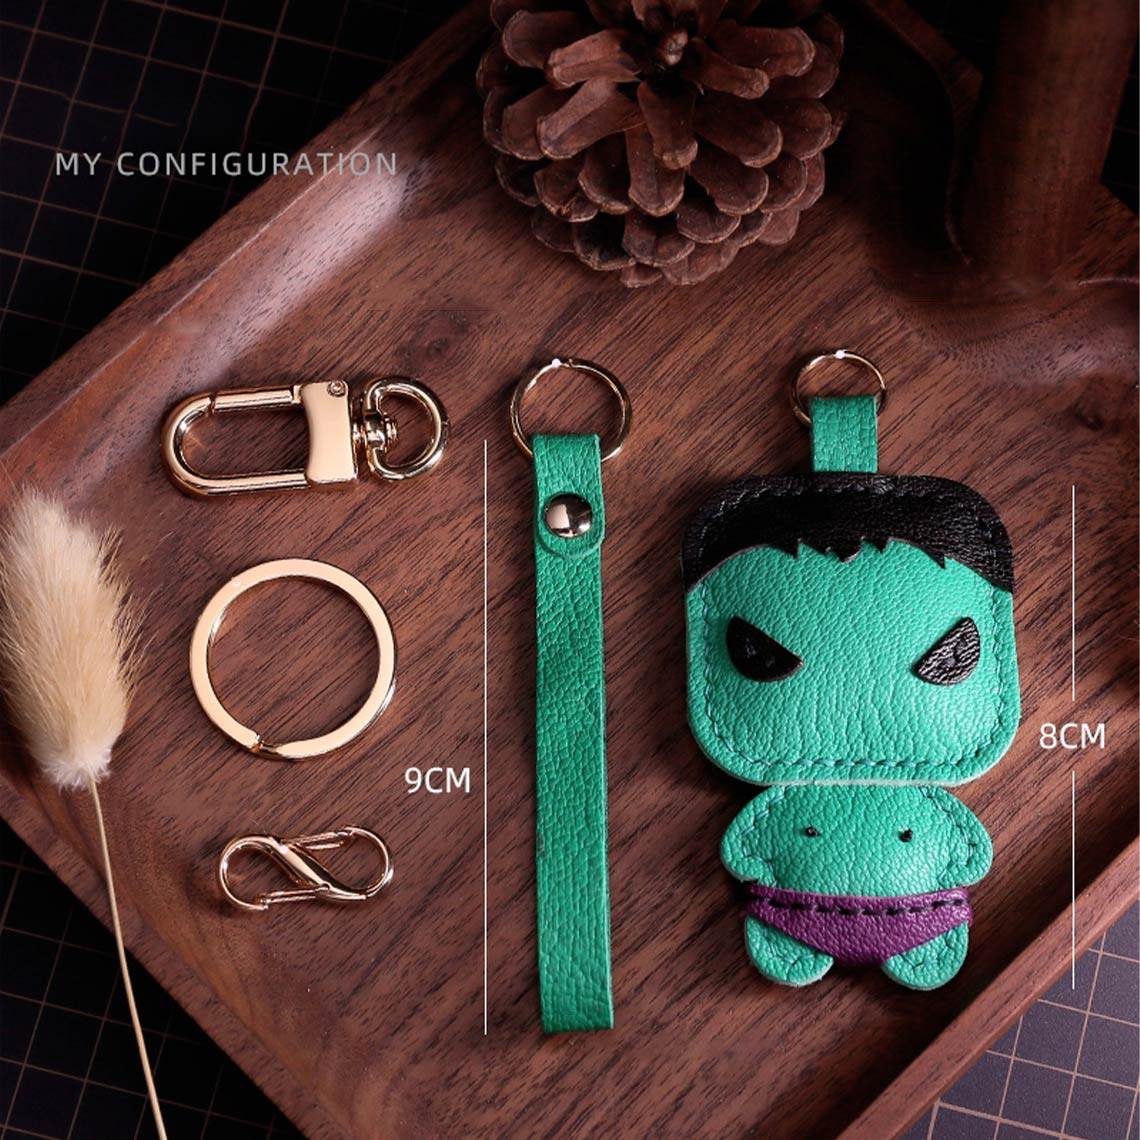 How to make a Hulk Gift - Homemade Hulk Keychain | POPSEWING™